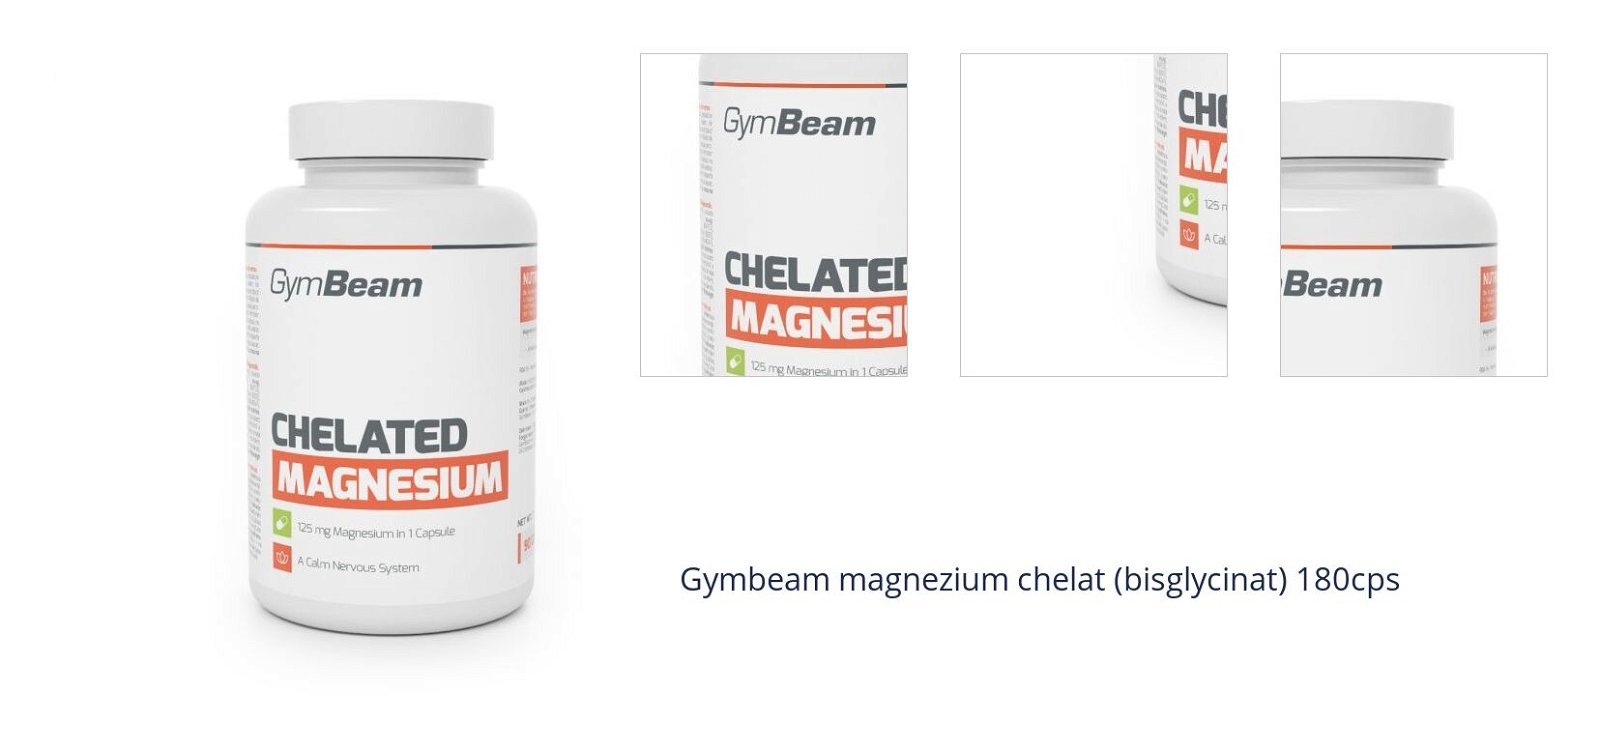 Gymbeam magnezium chelat (bisglycinat) 180cps 1